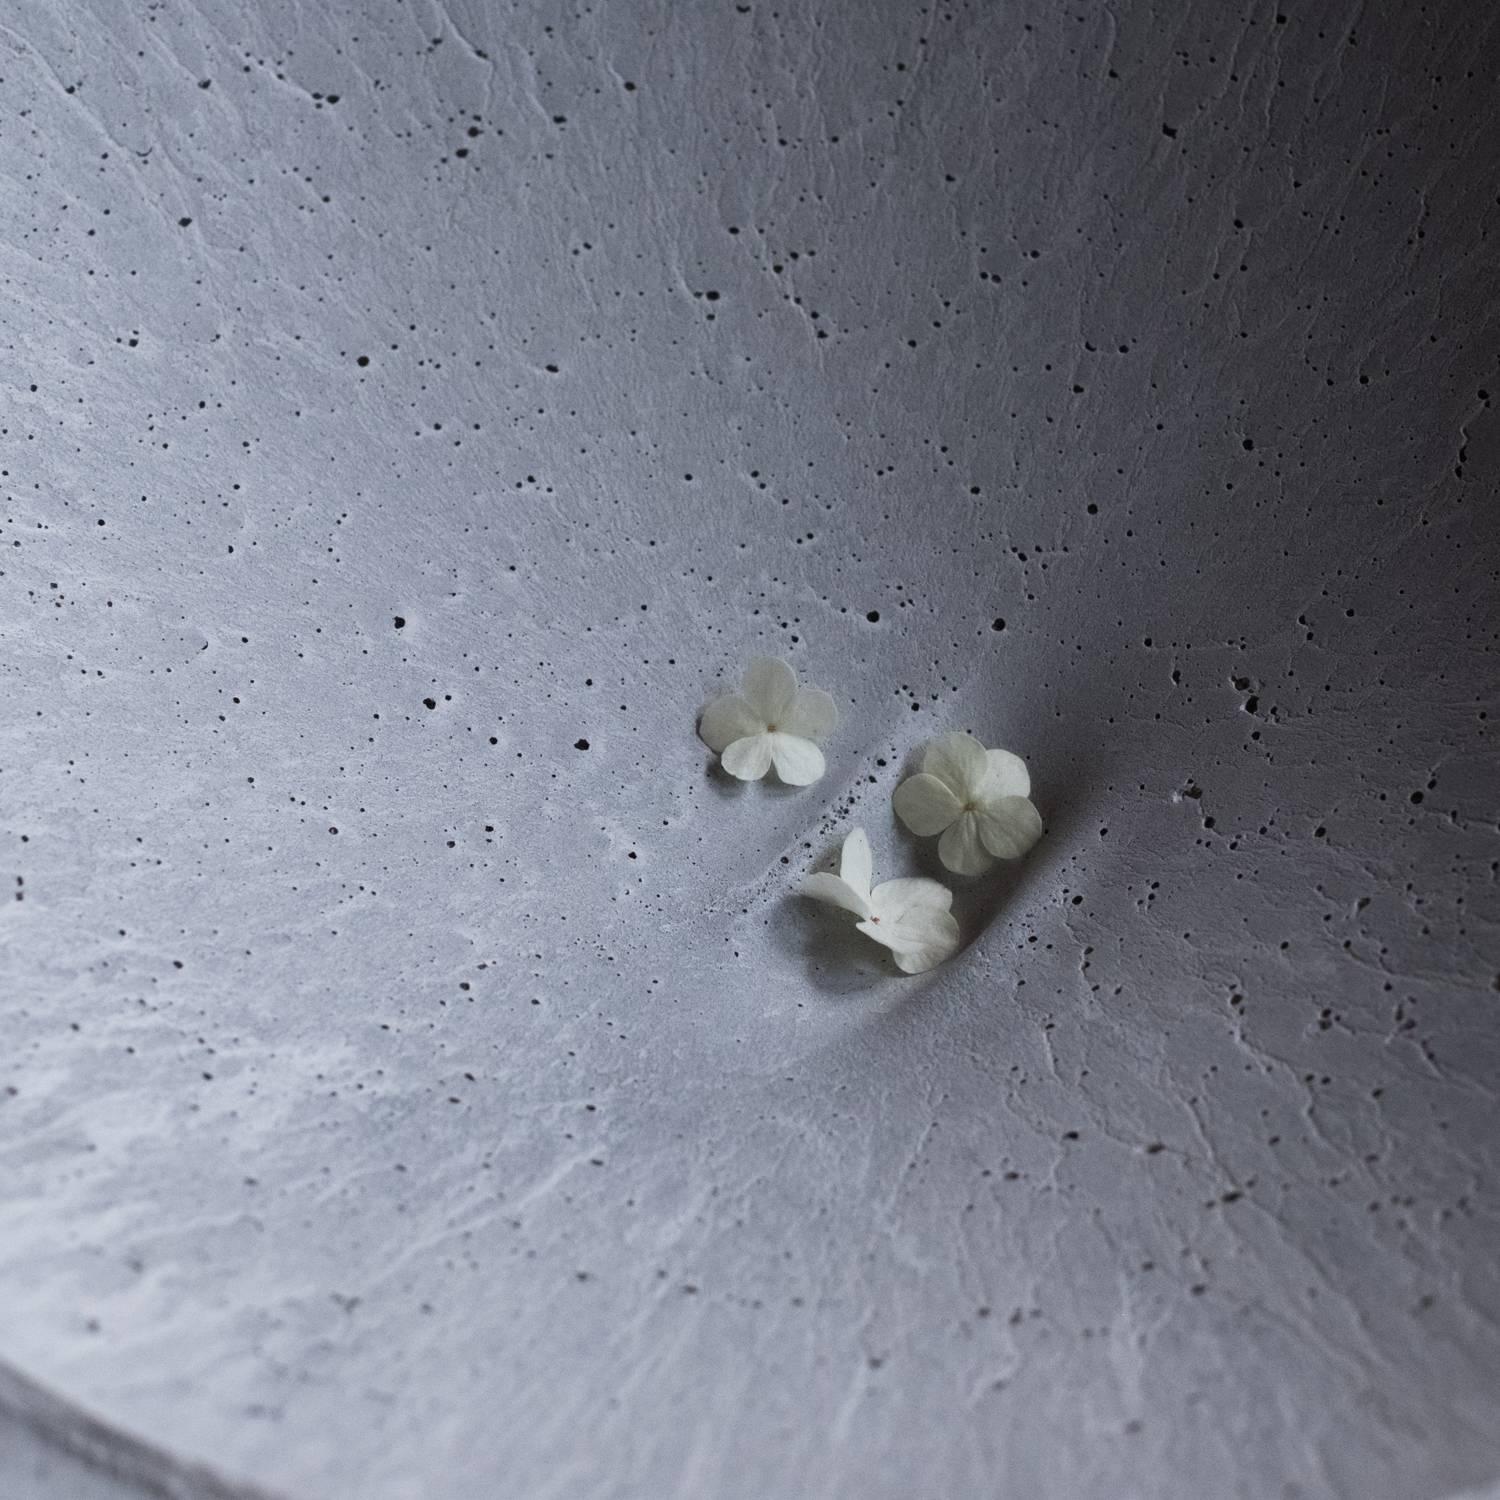 Handmade Cast Concrete Bowl in White by UMÉ Studio 3